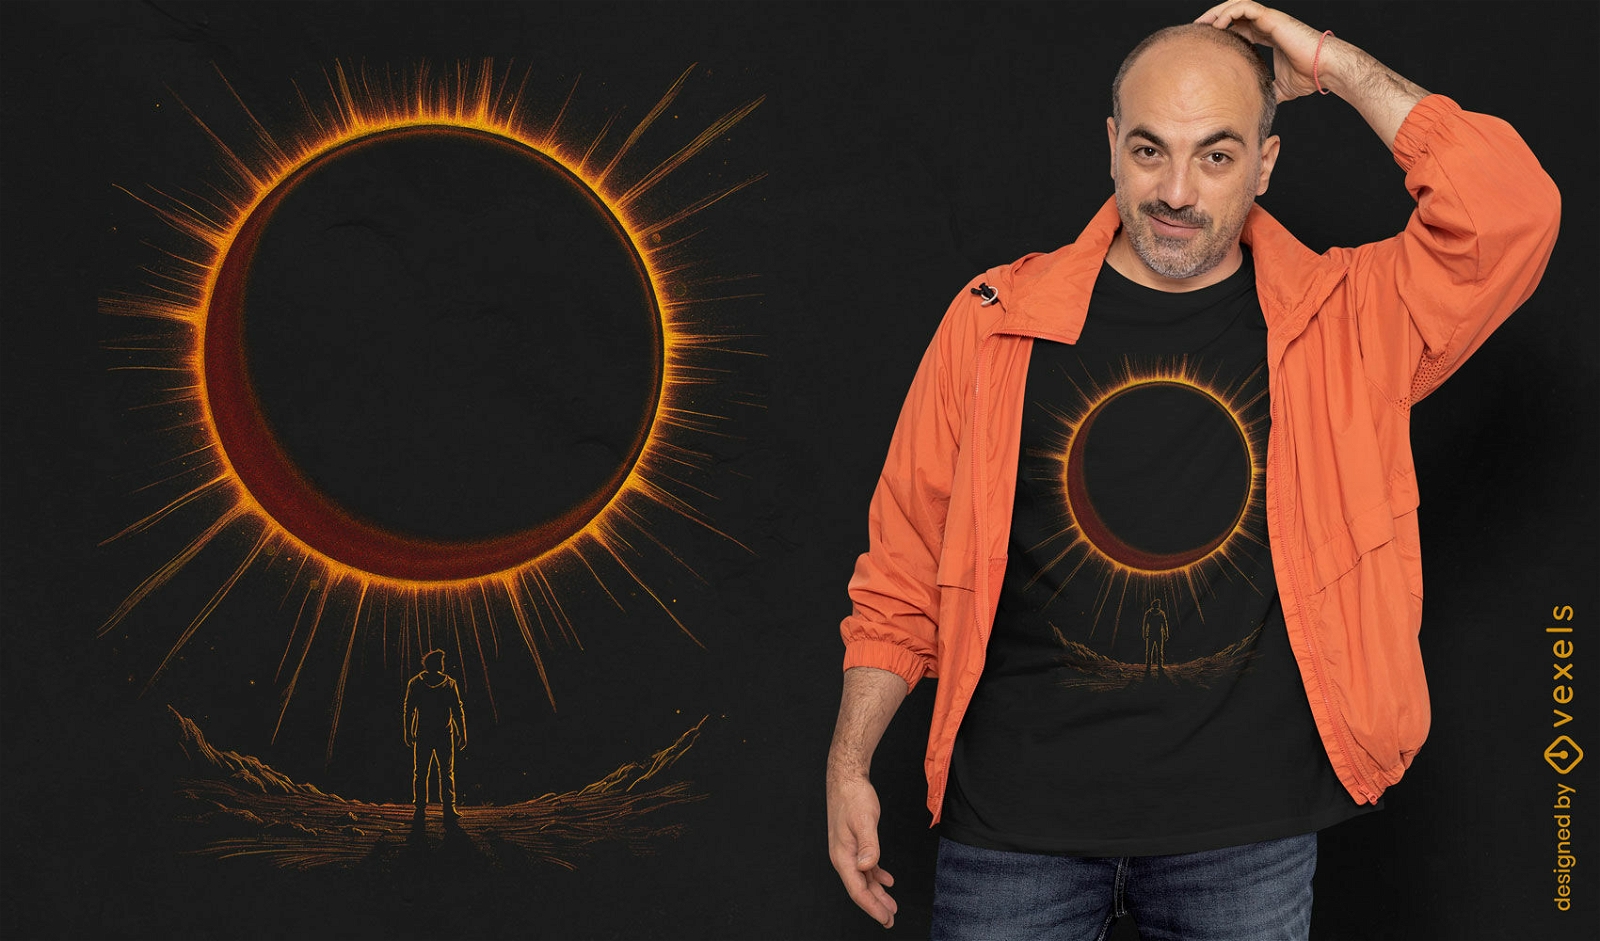 Dise?o de camiseta de hombre viendo eclipse.